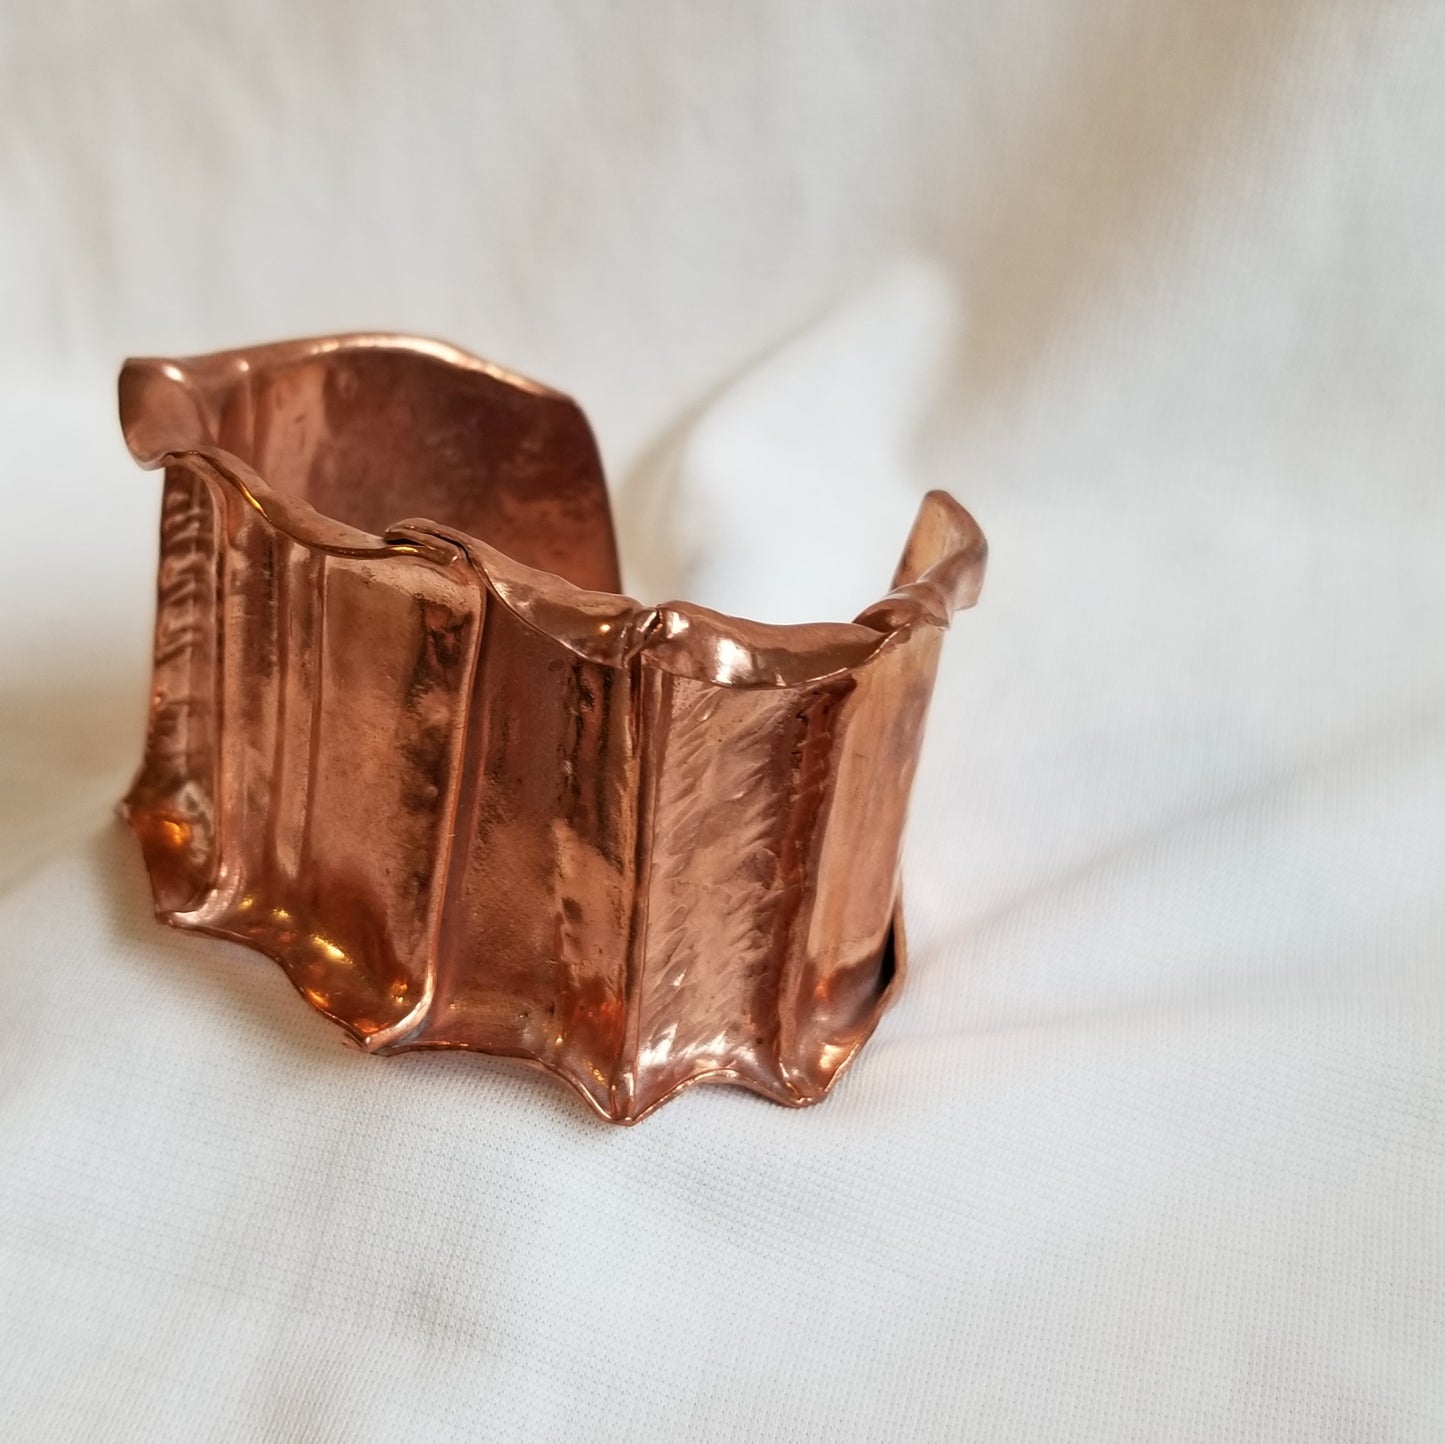 Folded Copper Bracelet